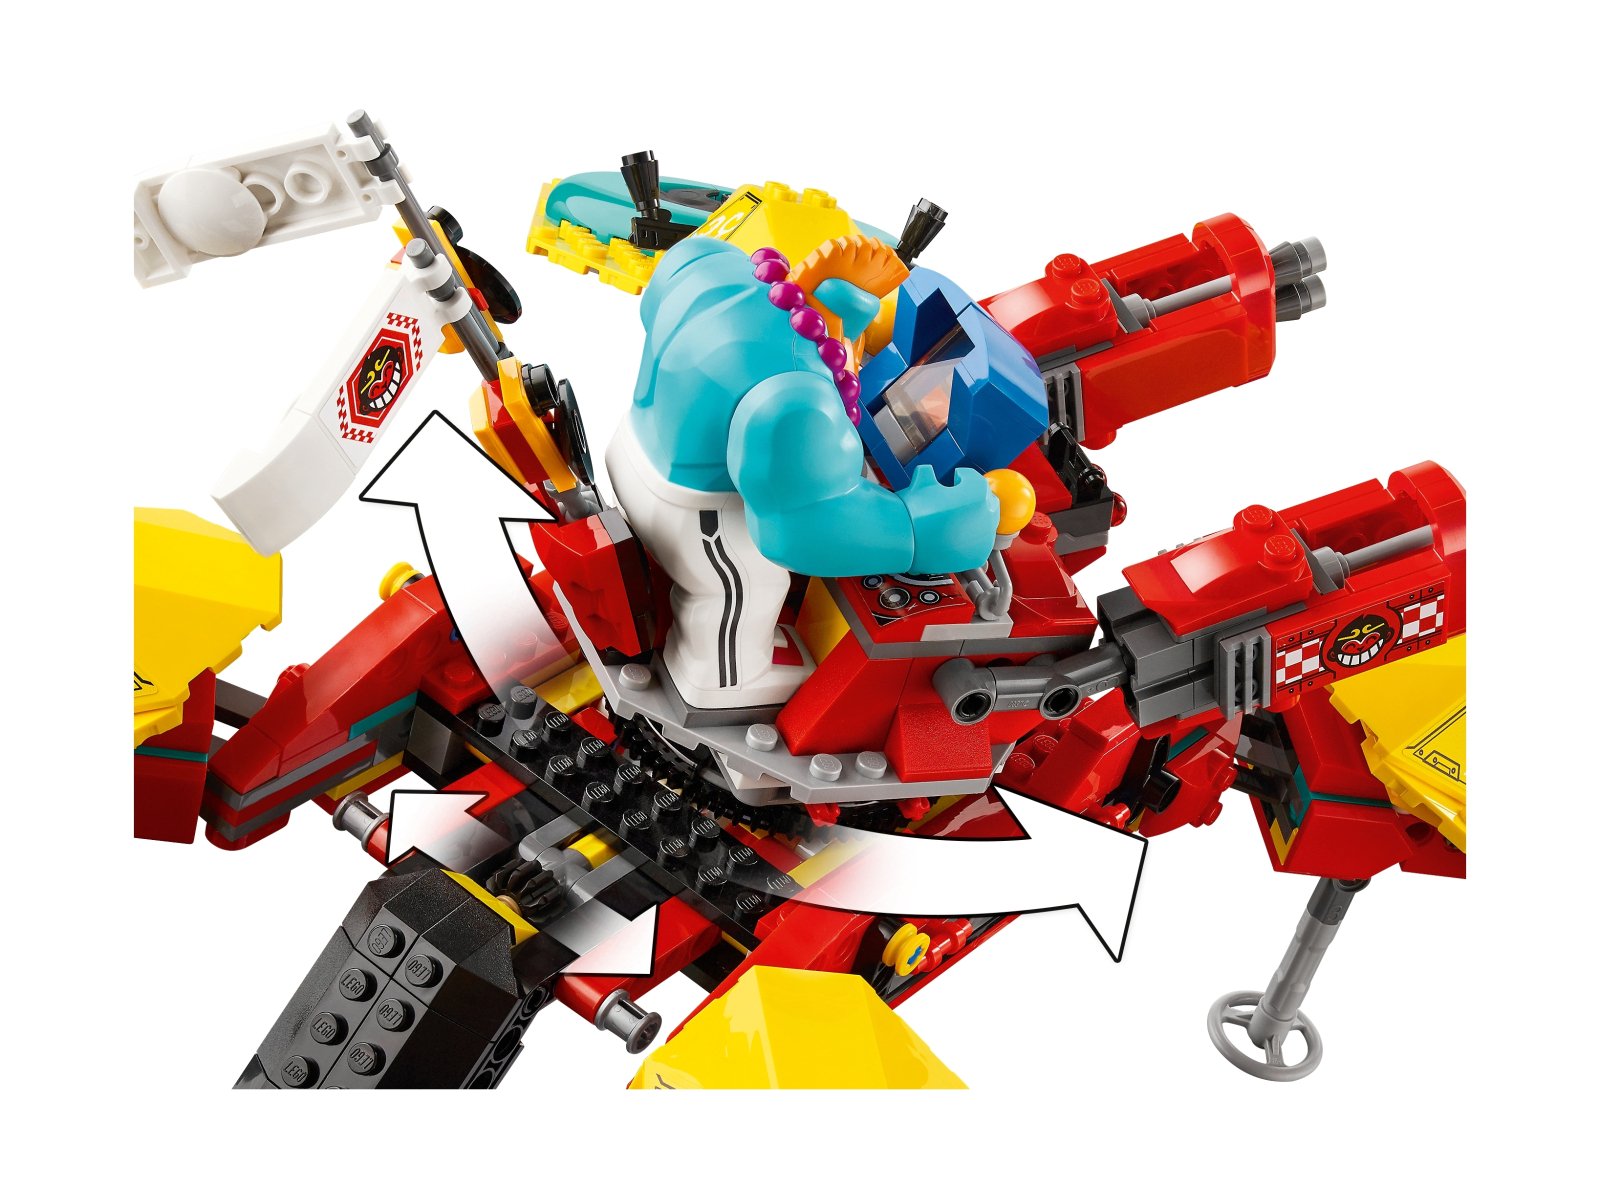 LEGO 80023 Monkie Kid Dronkopter ekipy Monkie Kida